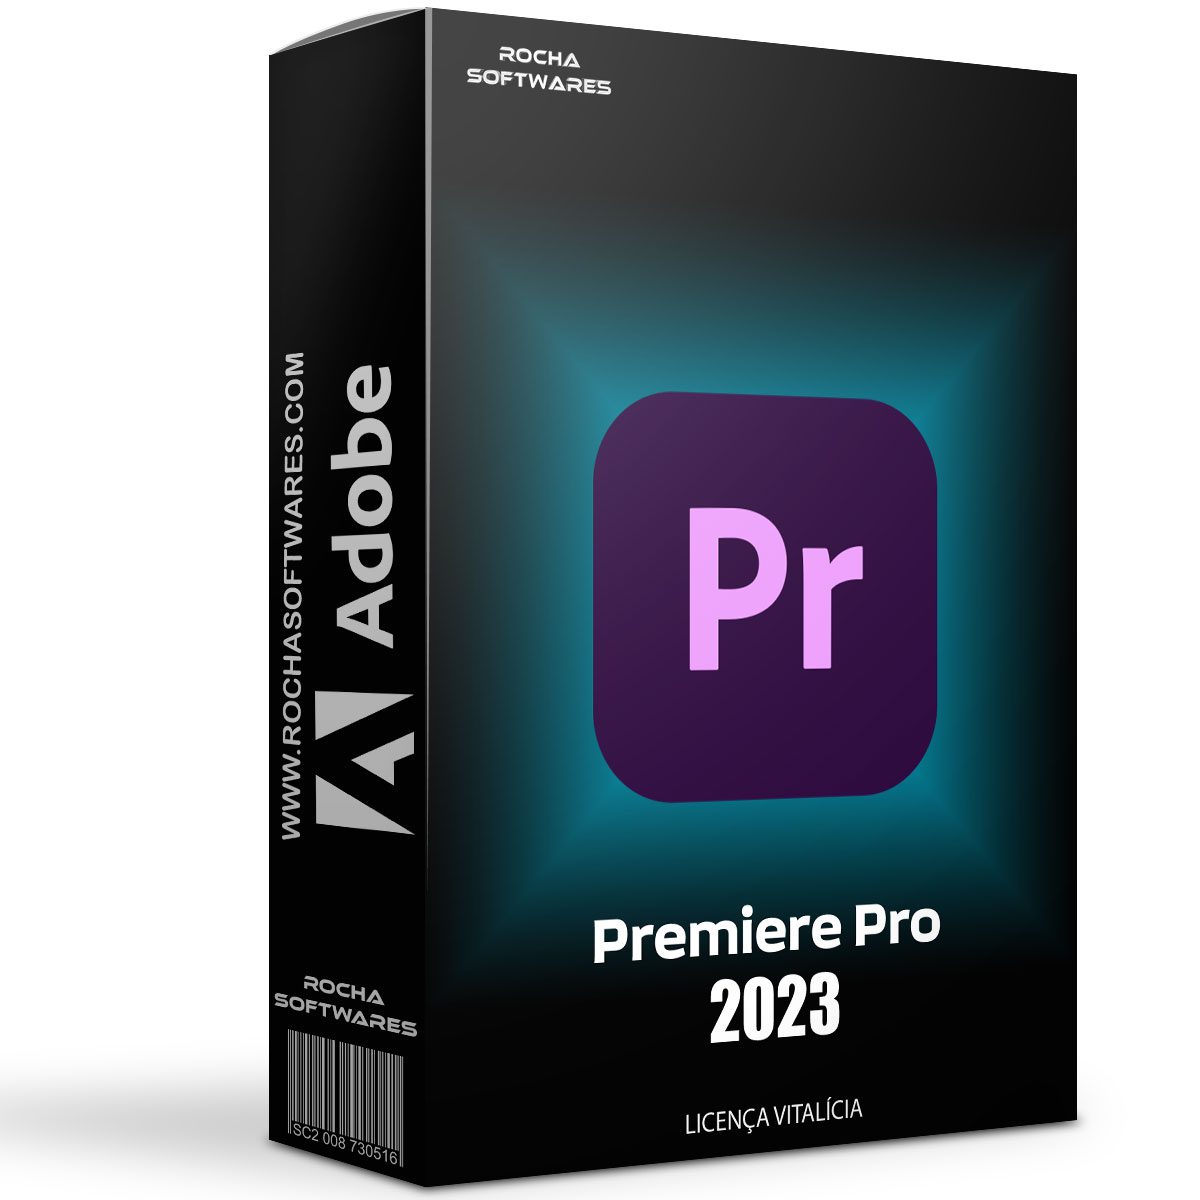 Adobe Premiere Pro 2023 Crack Full Version